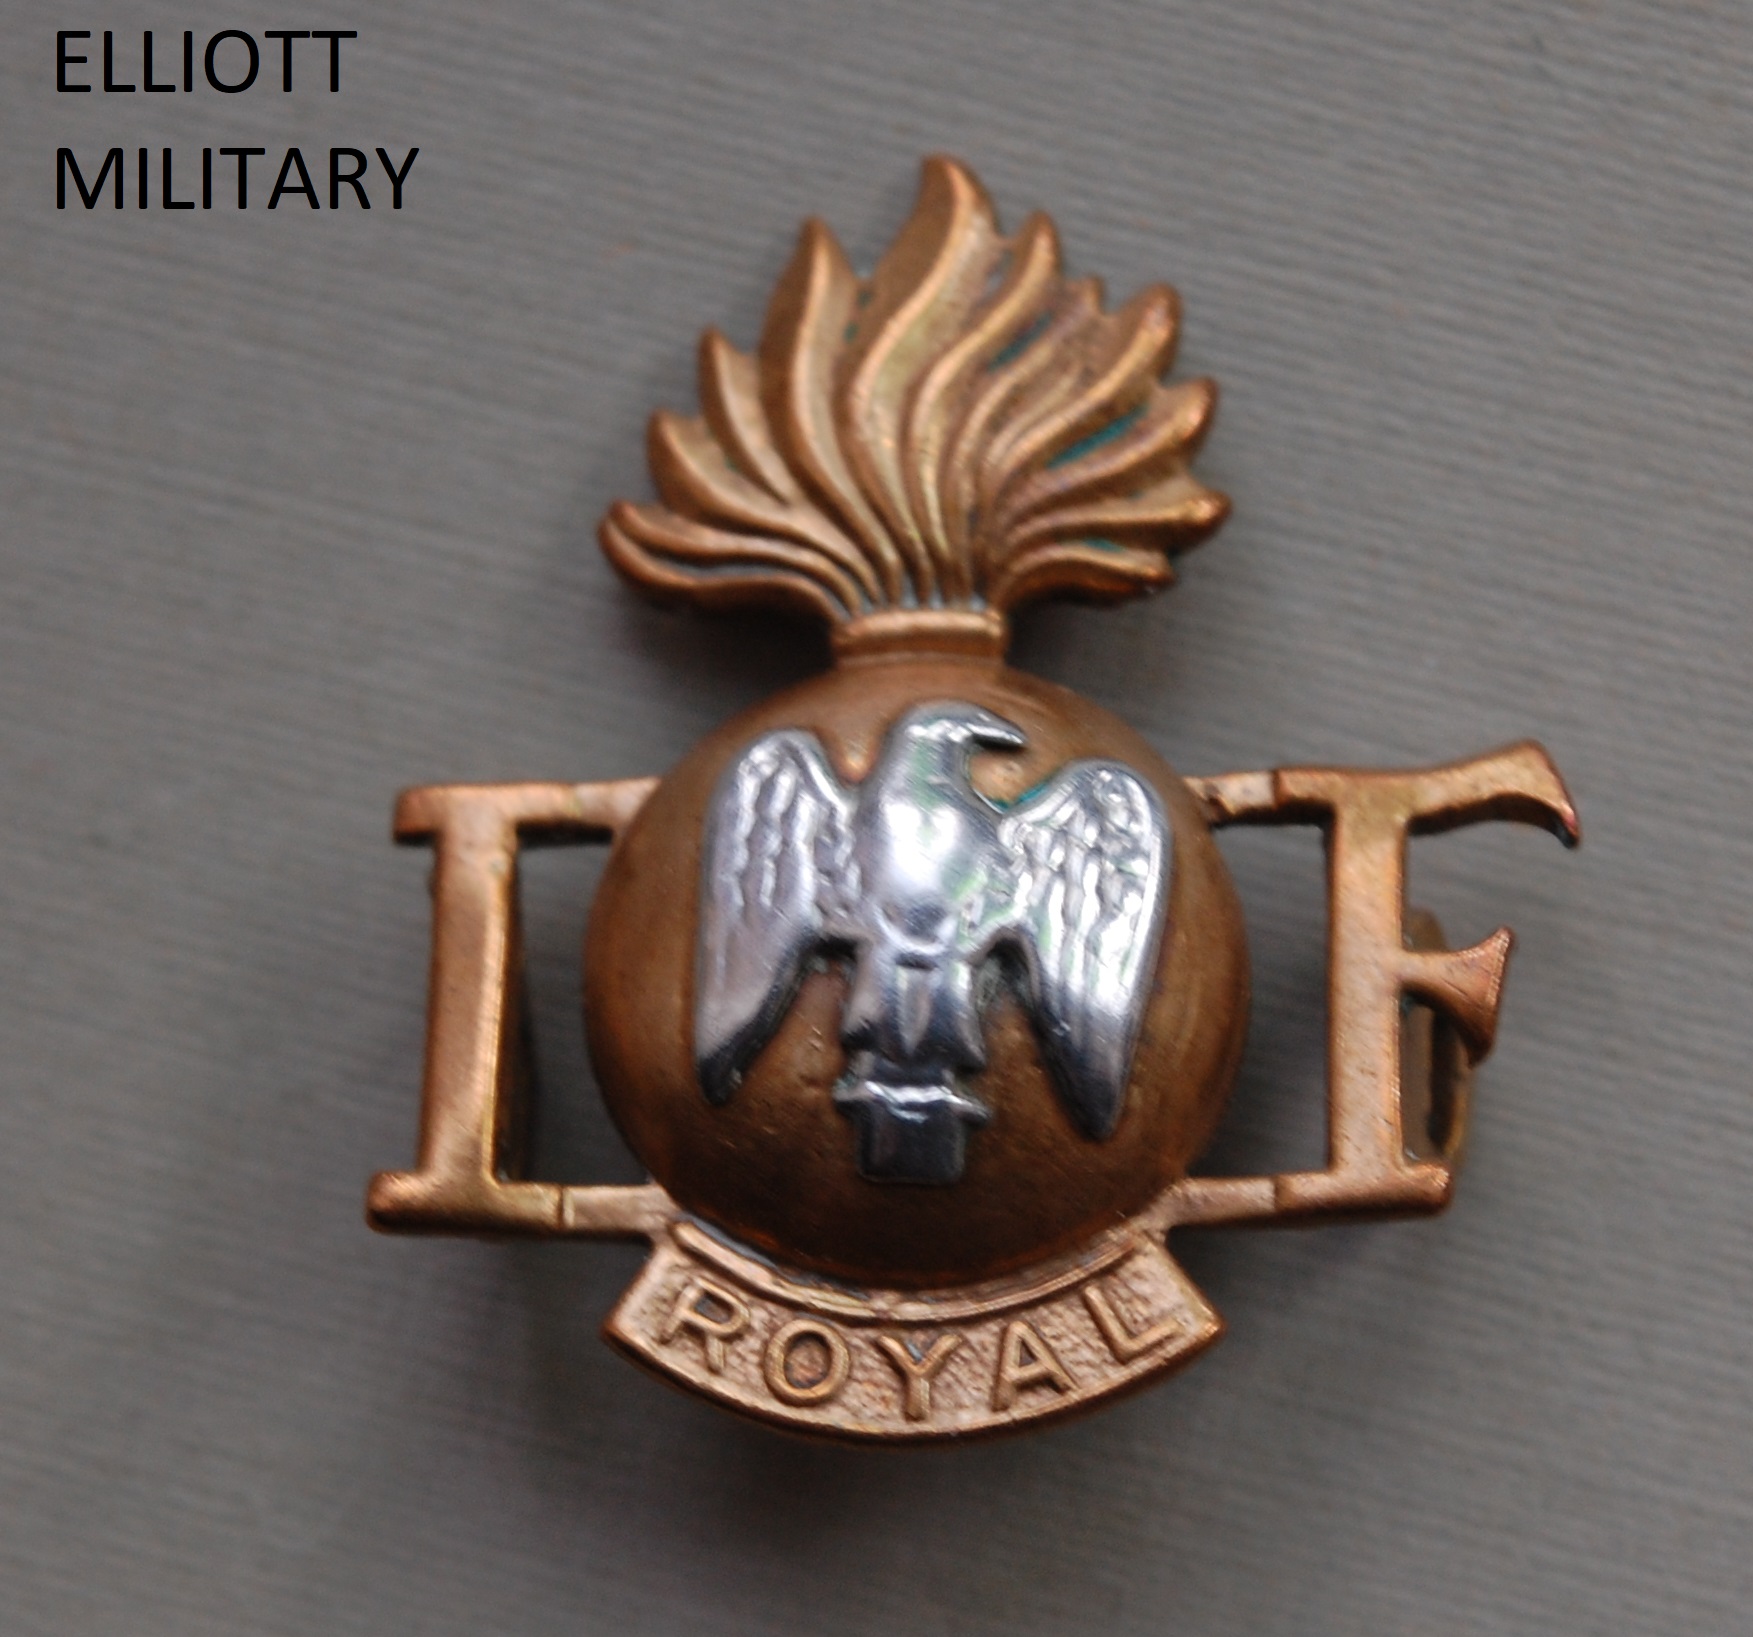 Royal Irish Fusiliers Shoulder Title - Elliott Military